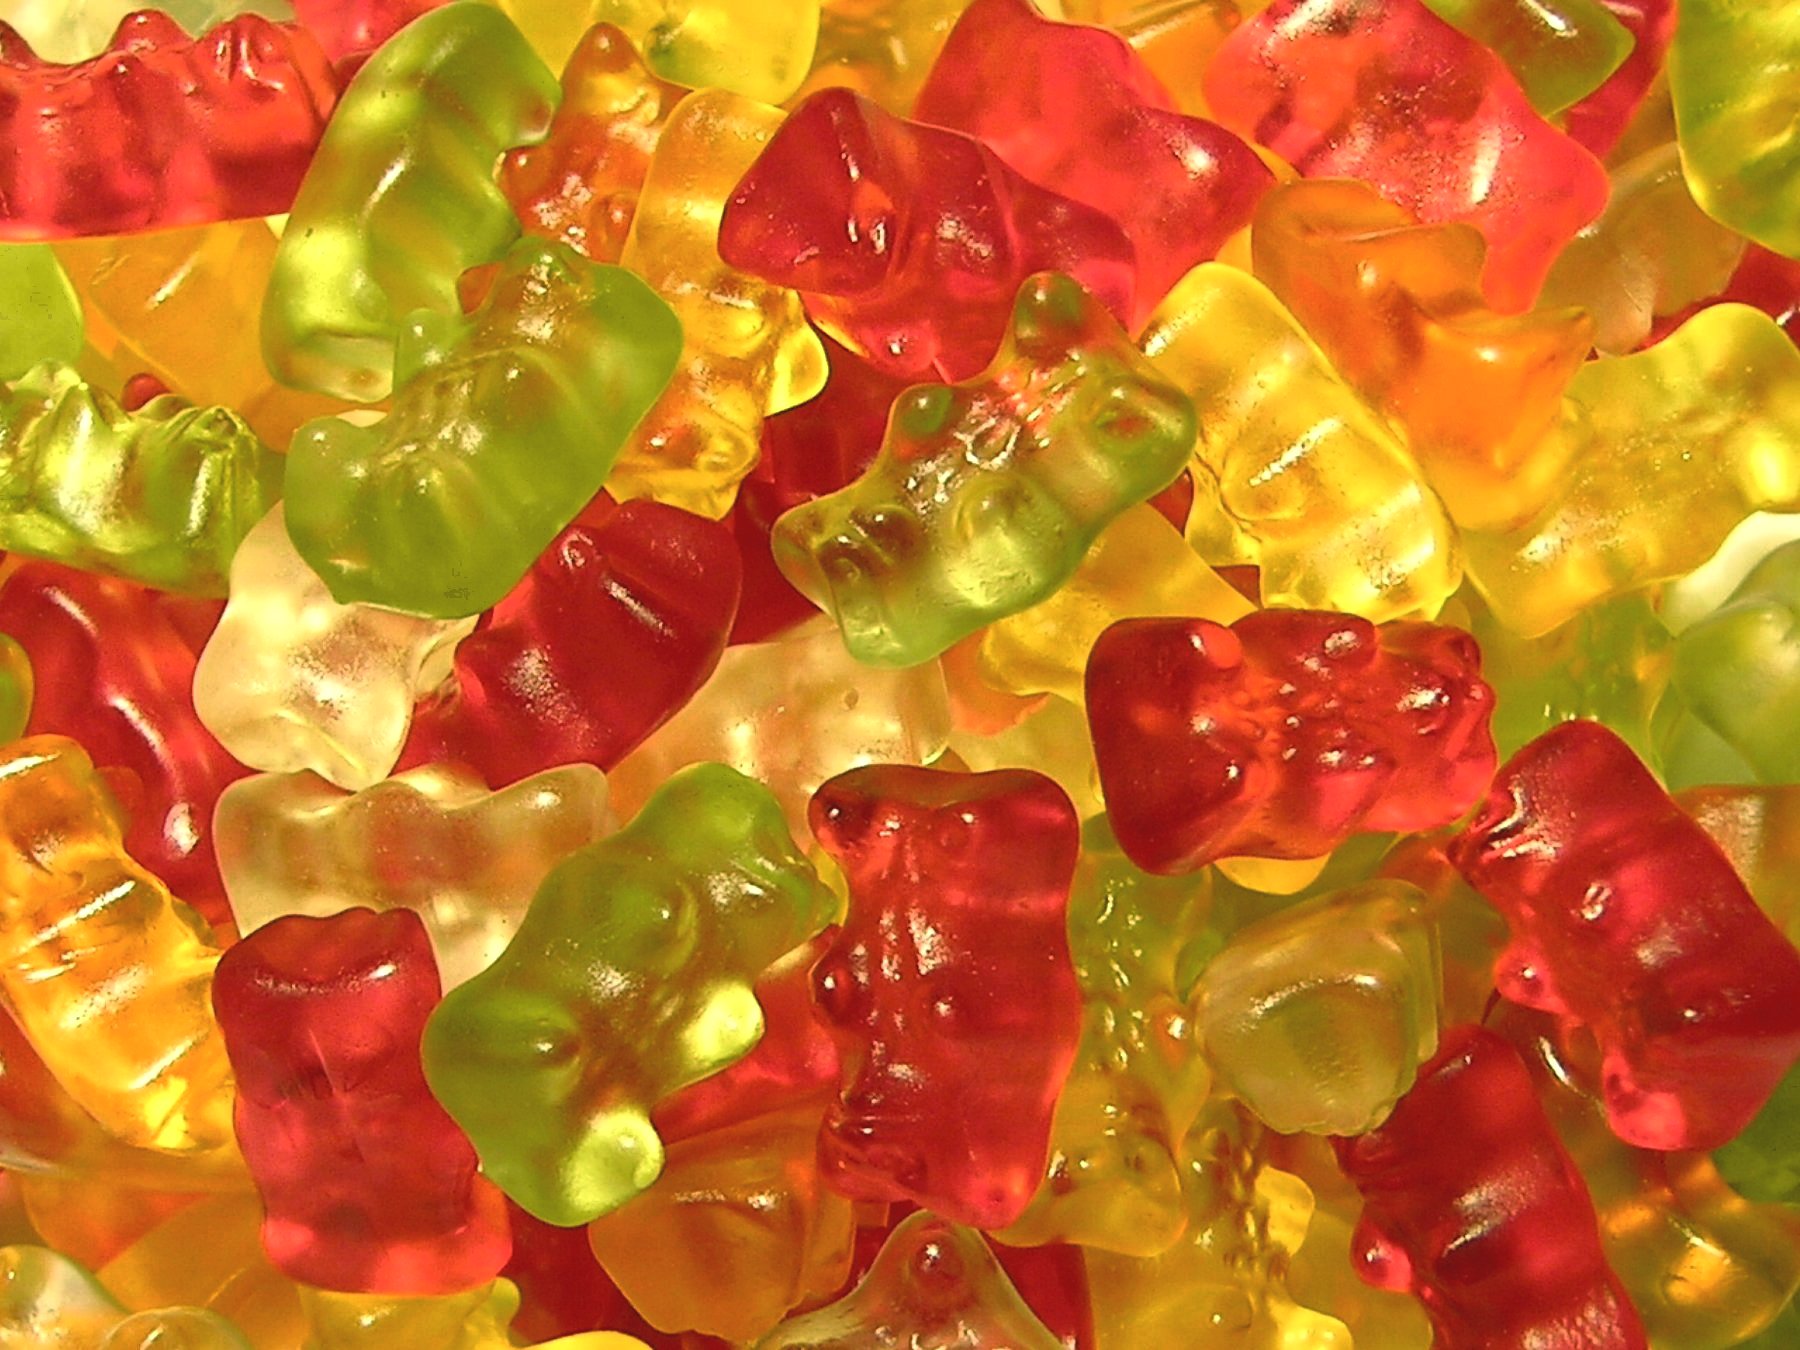 http://upload.wikimedia.org/wikipedia/commons/6/66/Gummy_bears.jpg